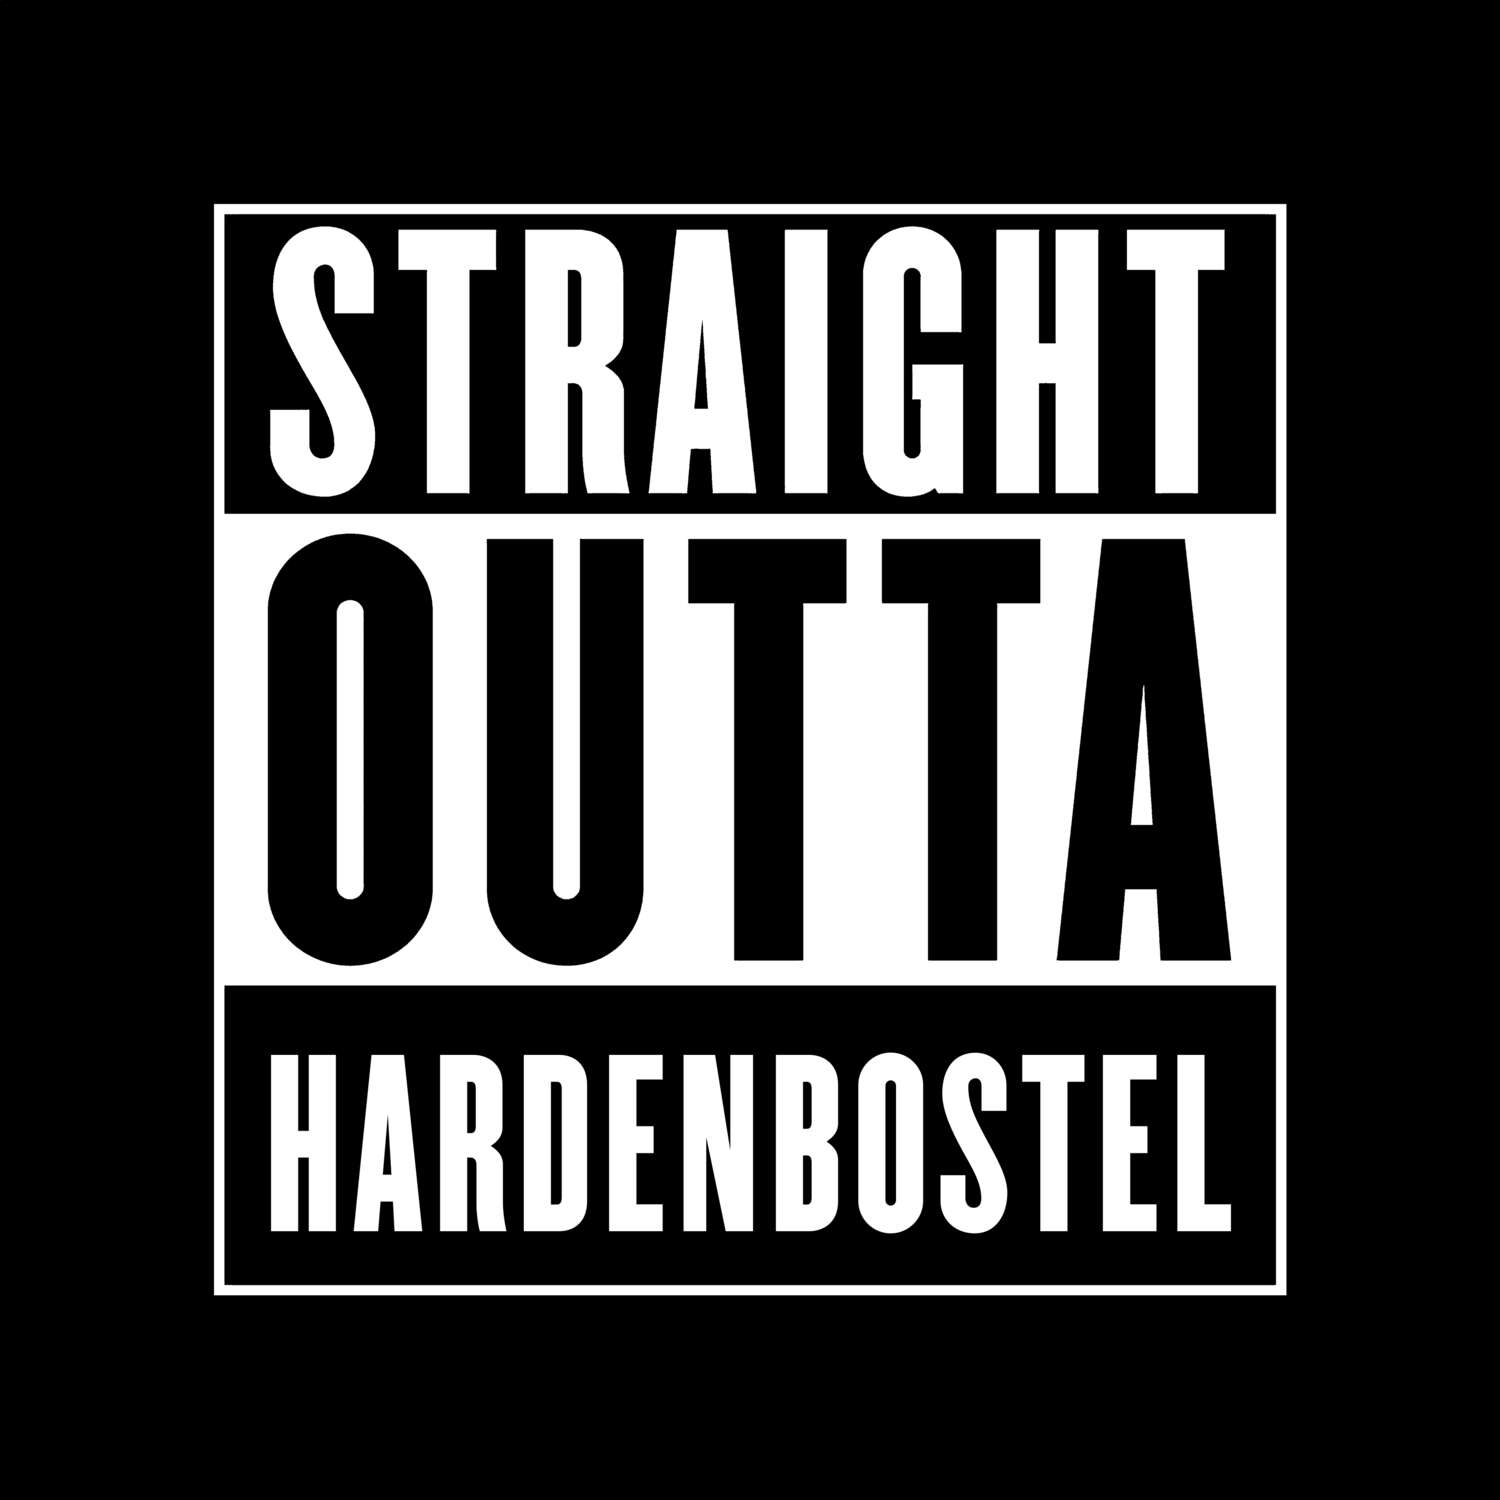 Hardenbostel T-Shirt »Straight Outta«